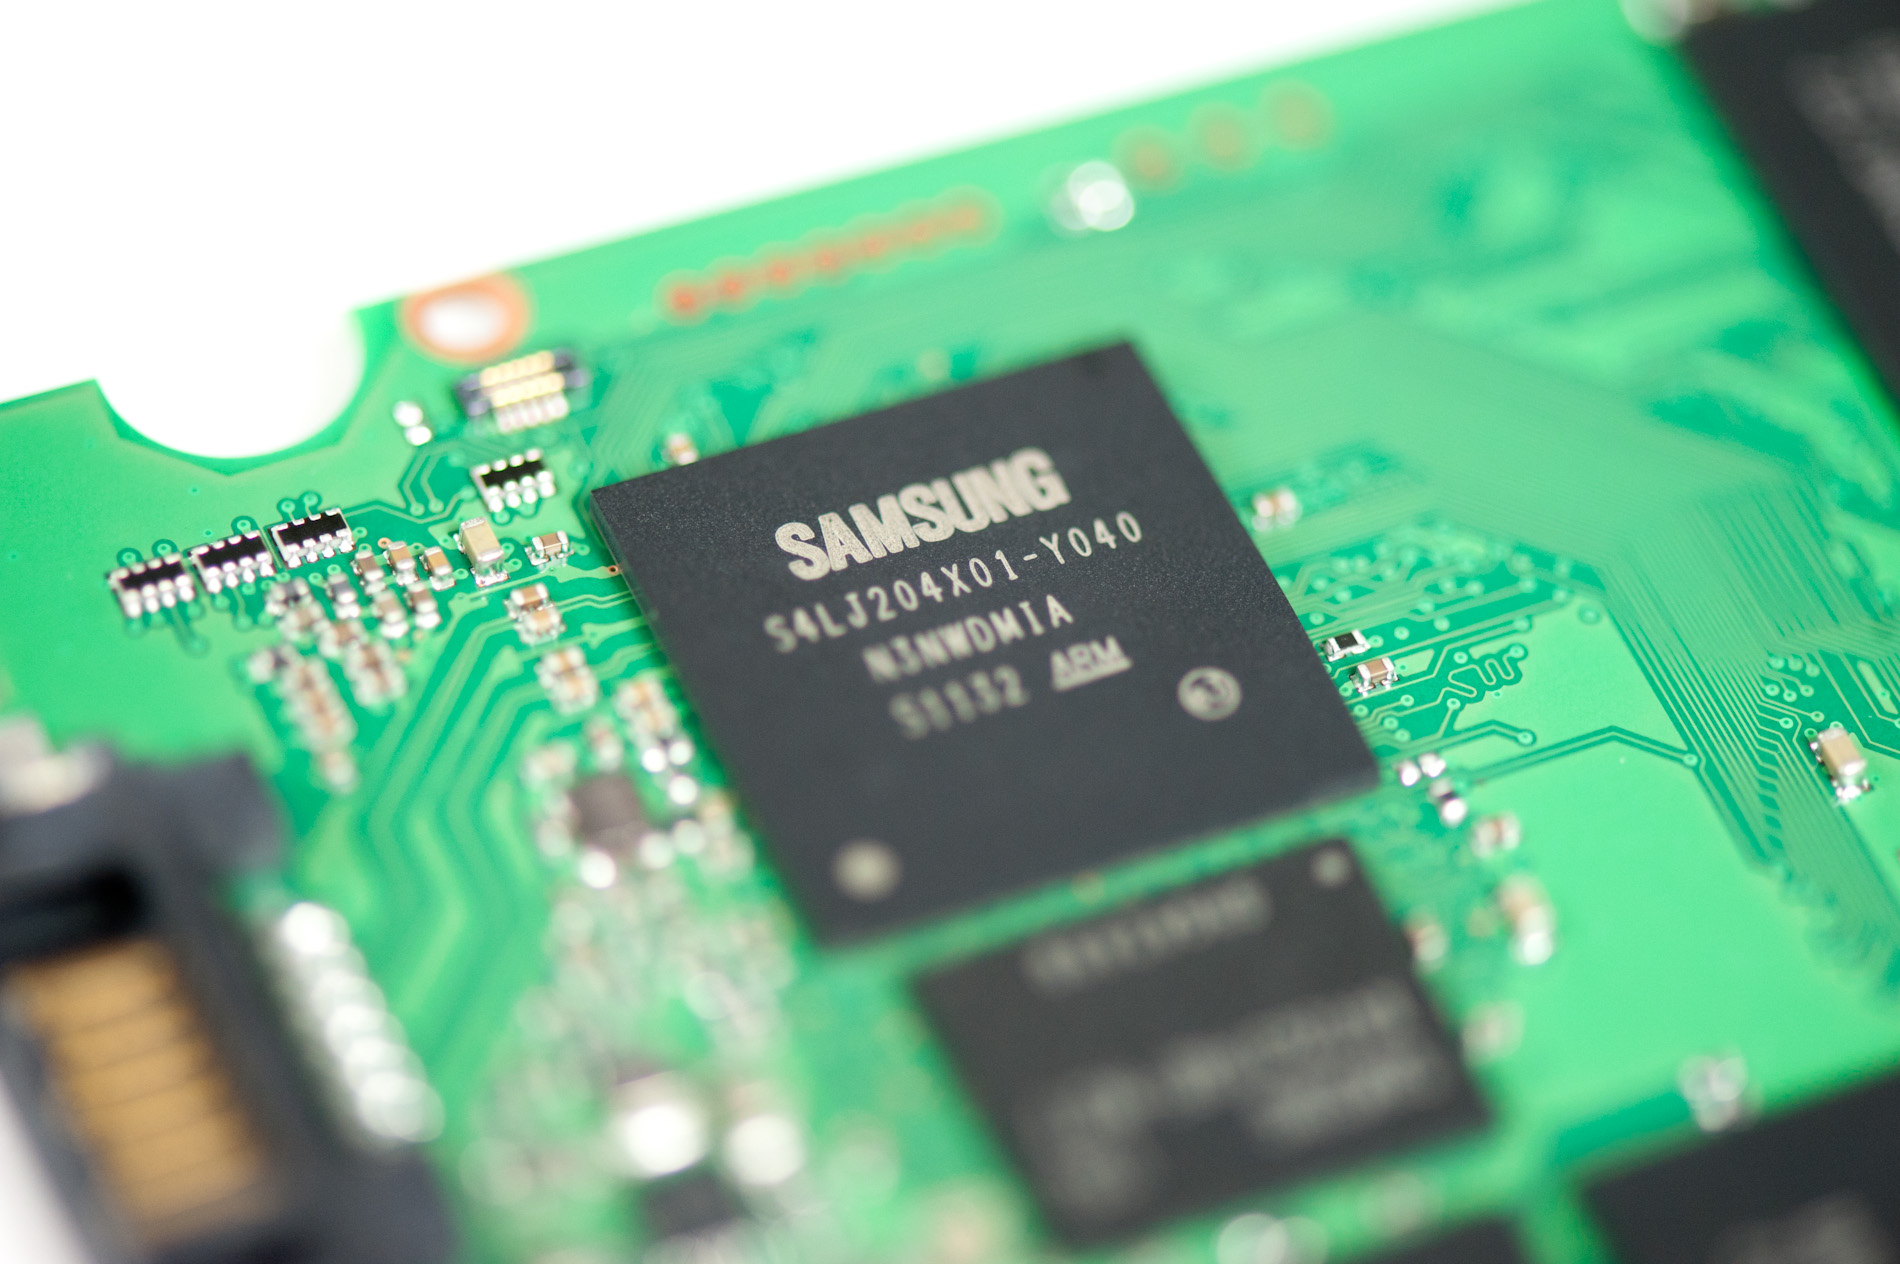 Samsung Ssd 830 Firmware Update Usb